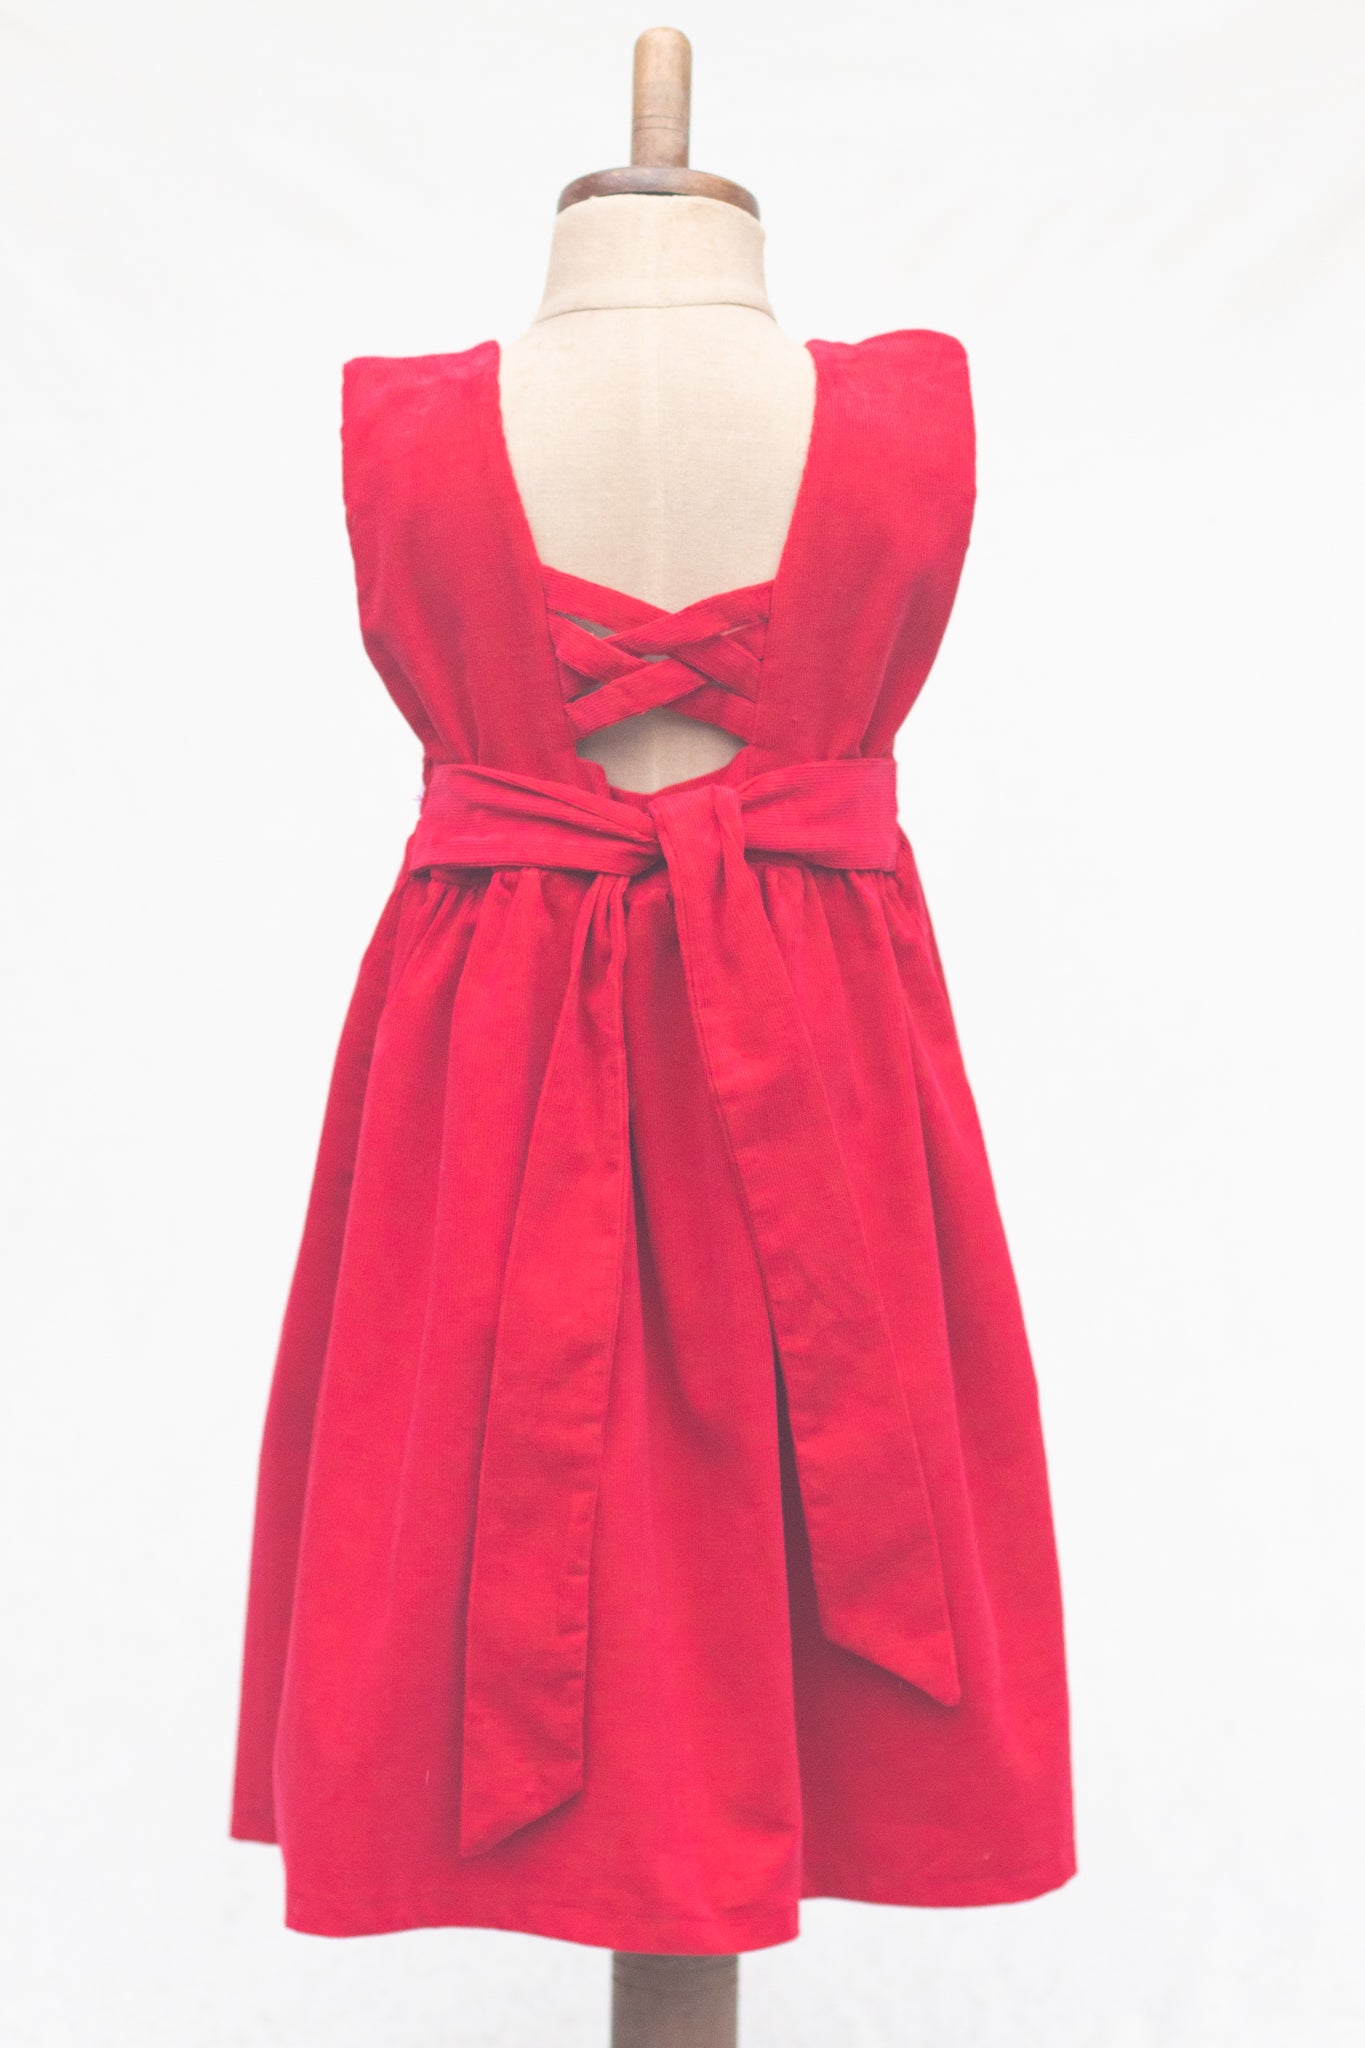 Hand-Smocked Dress, Red Corduroy